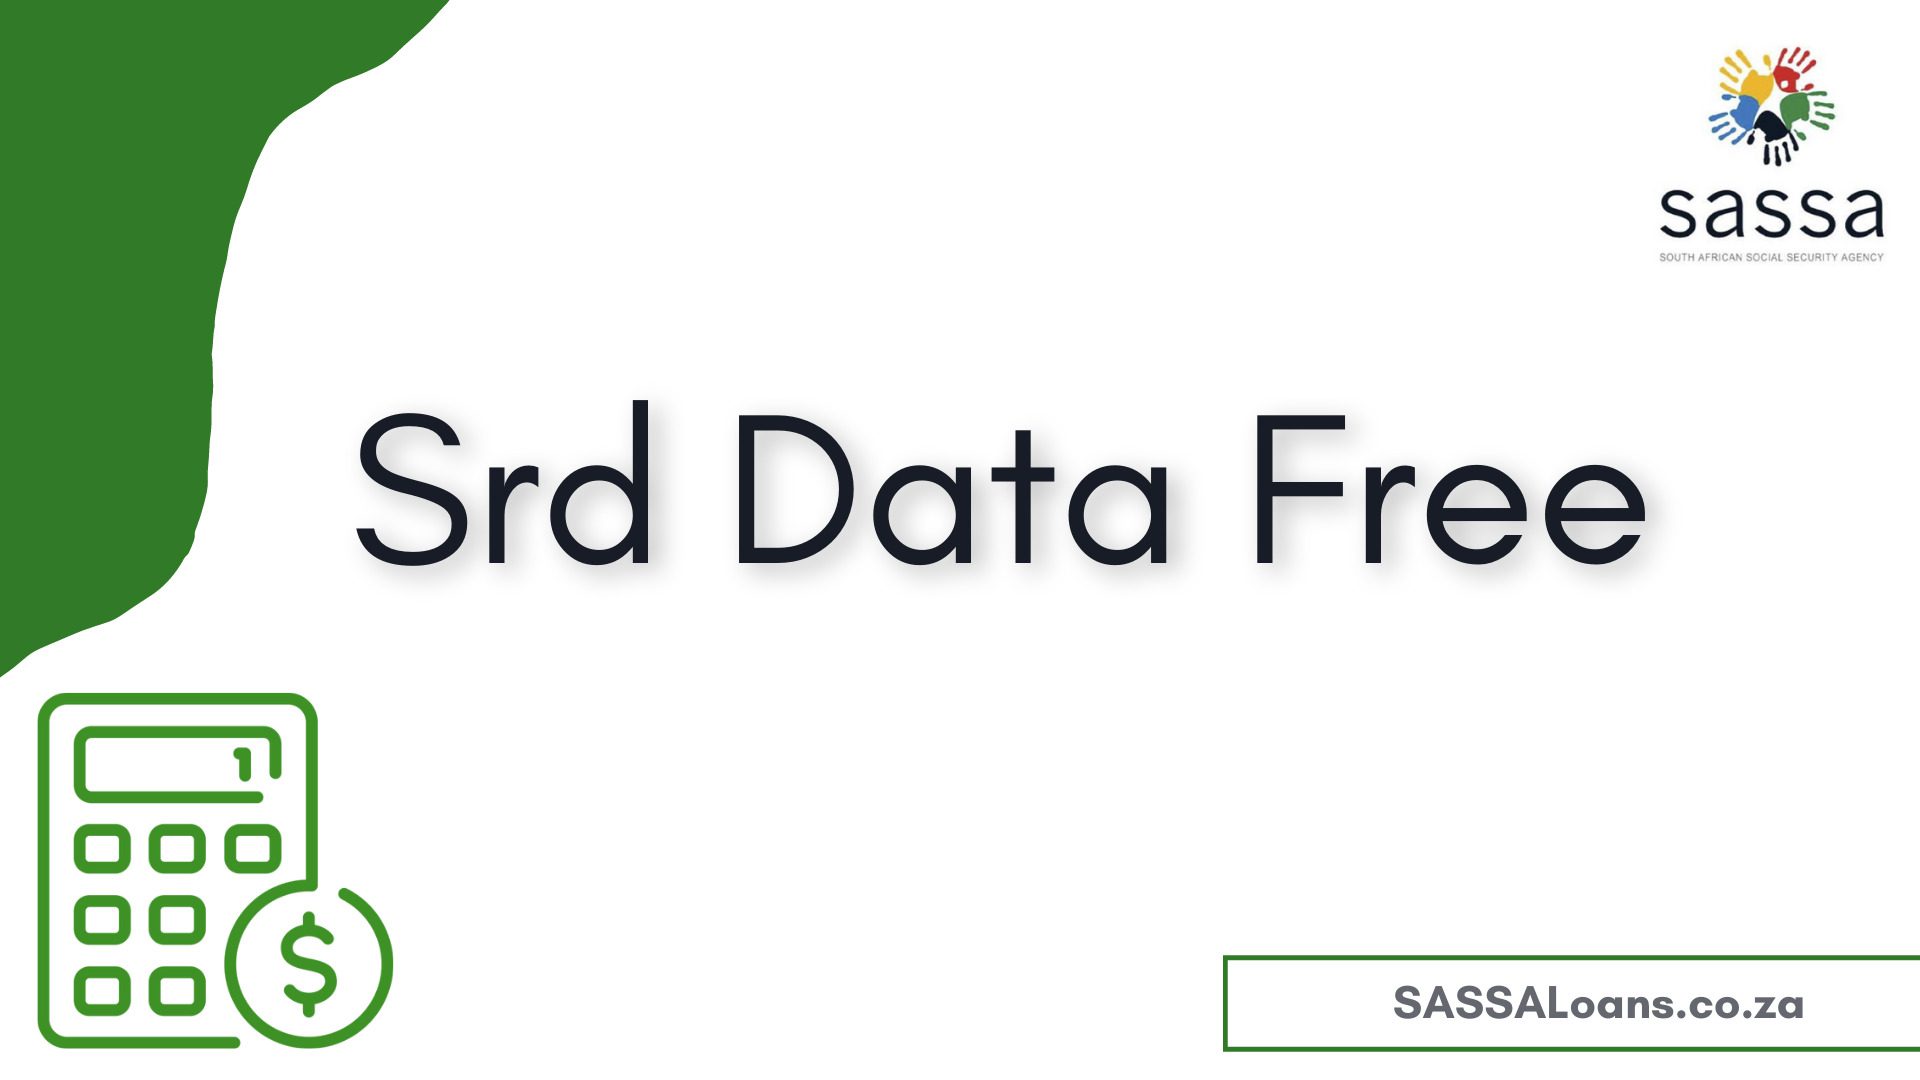 Srd Data Free